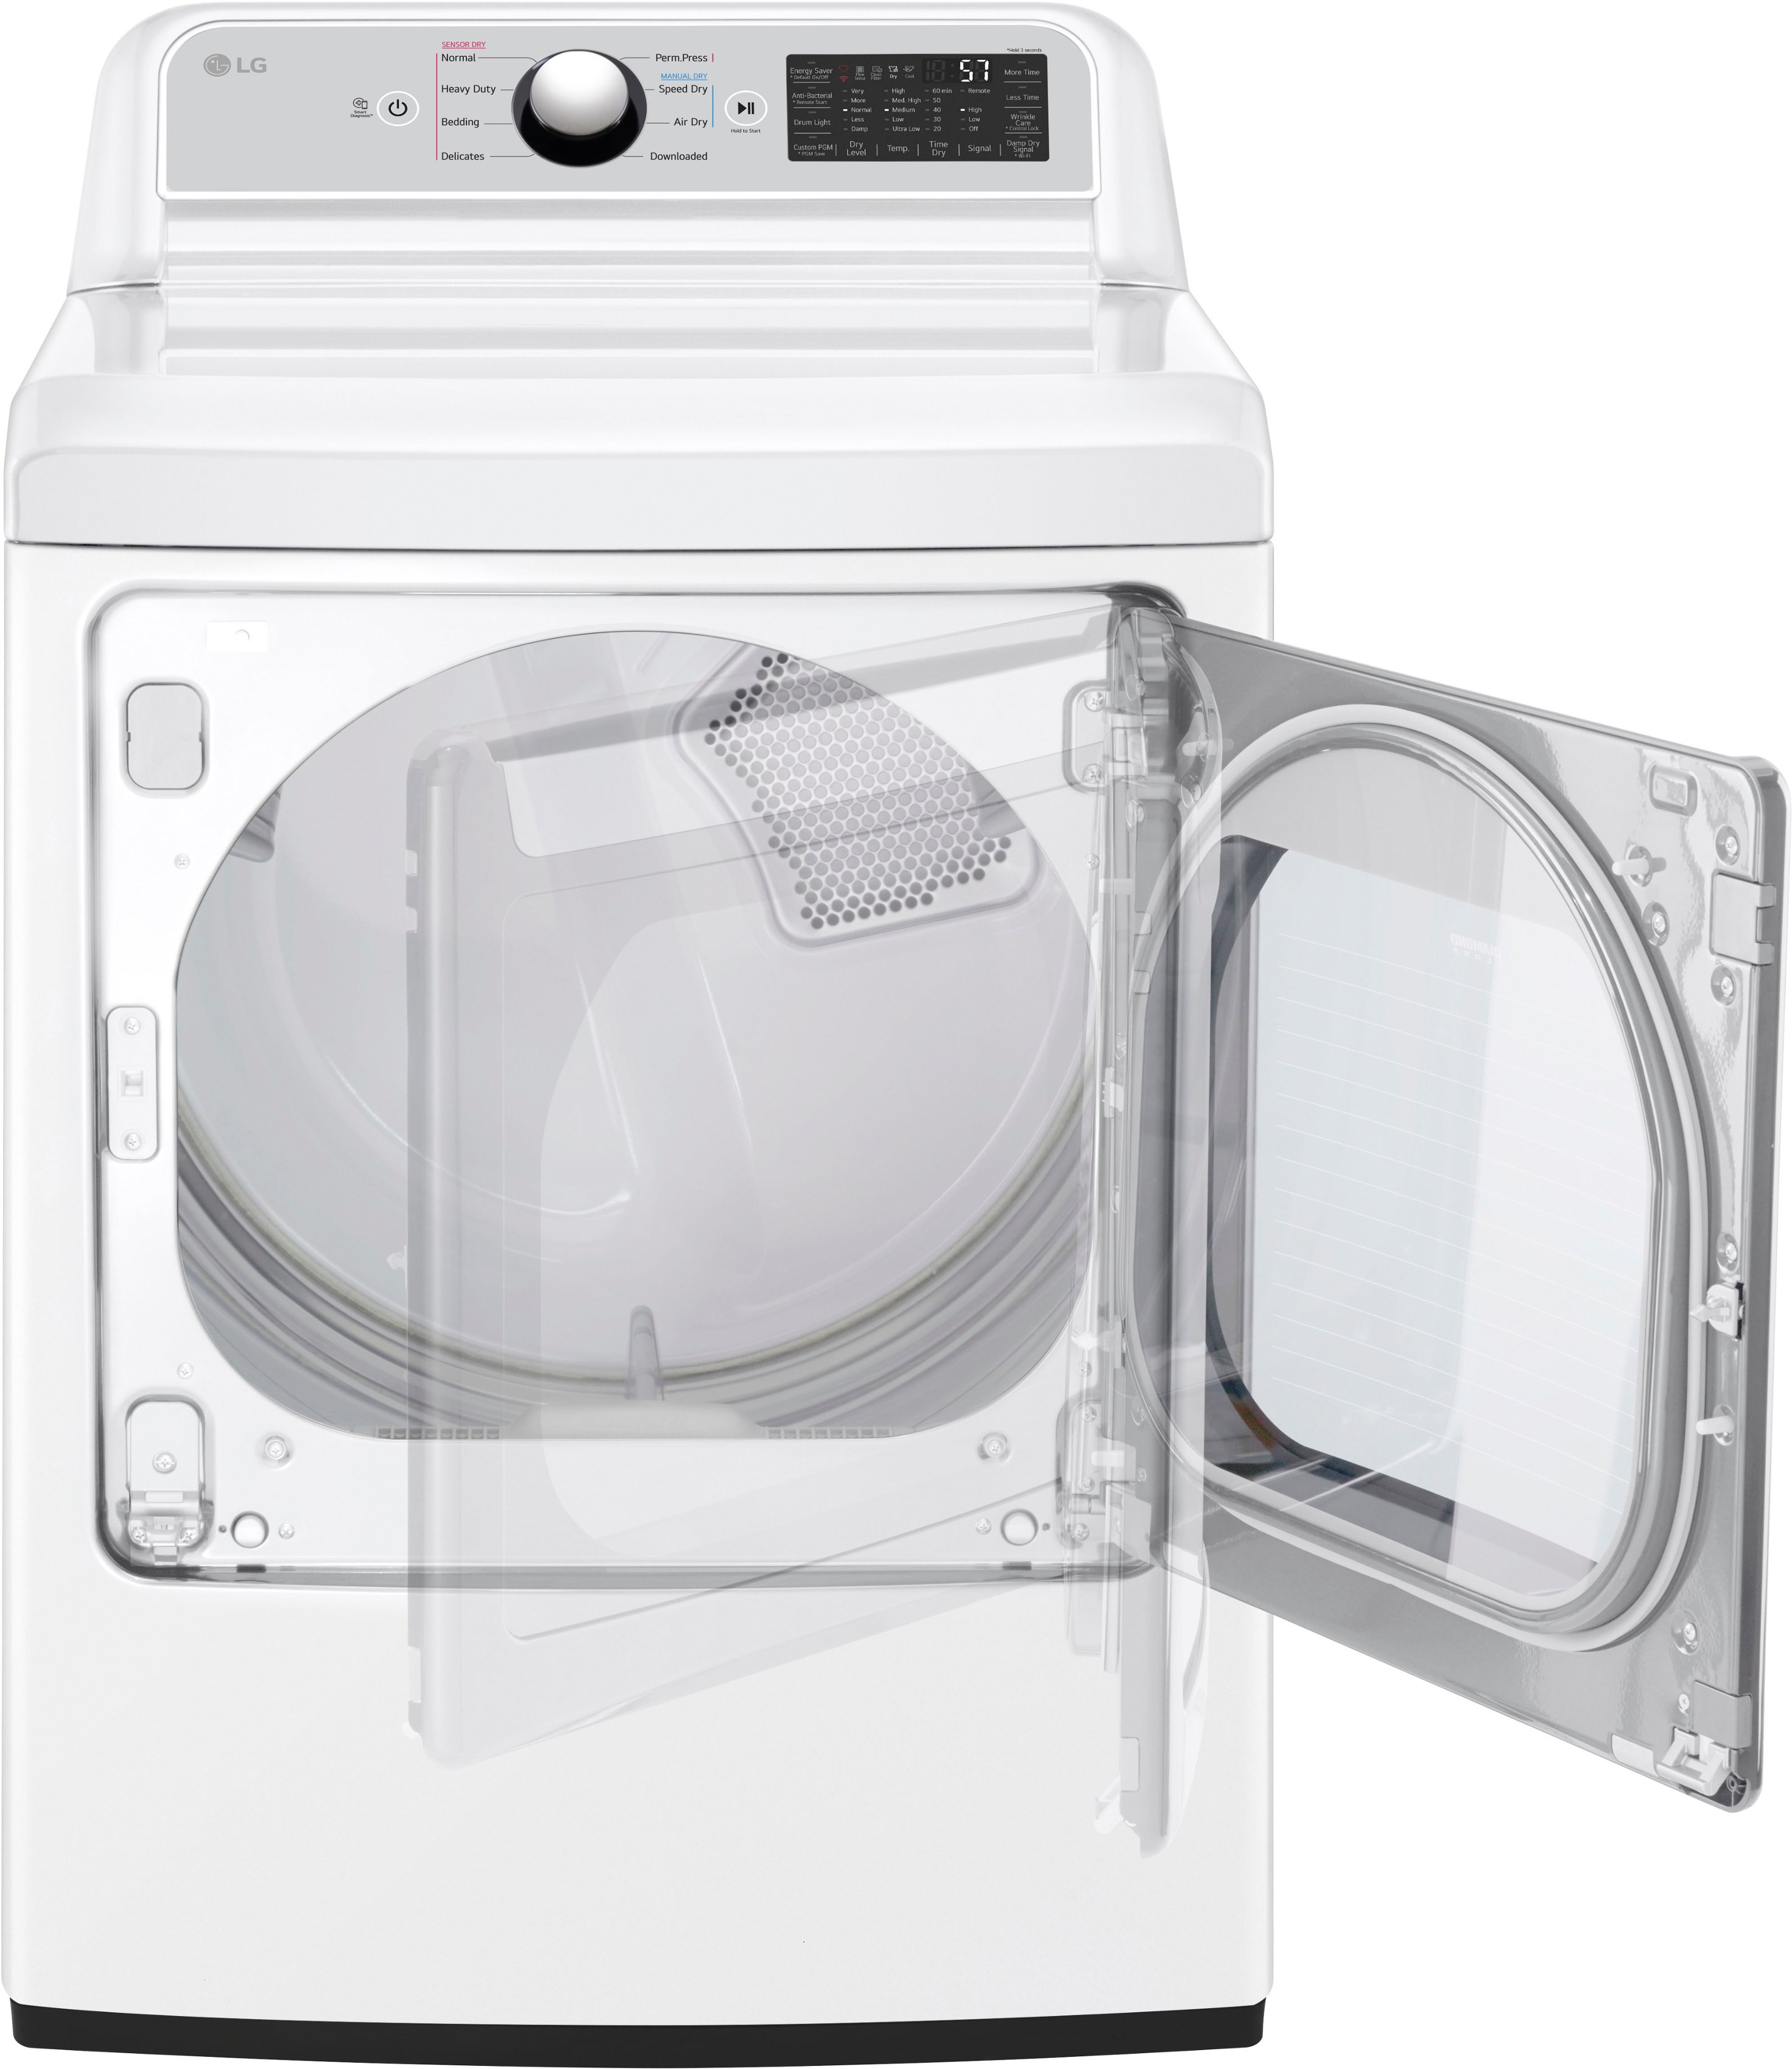 Zoom in on Left Zoom. LG - 7.3 Cu. Ft. Smart Electric Dryer with EasyLoad Door - White.